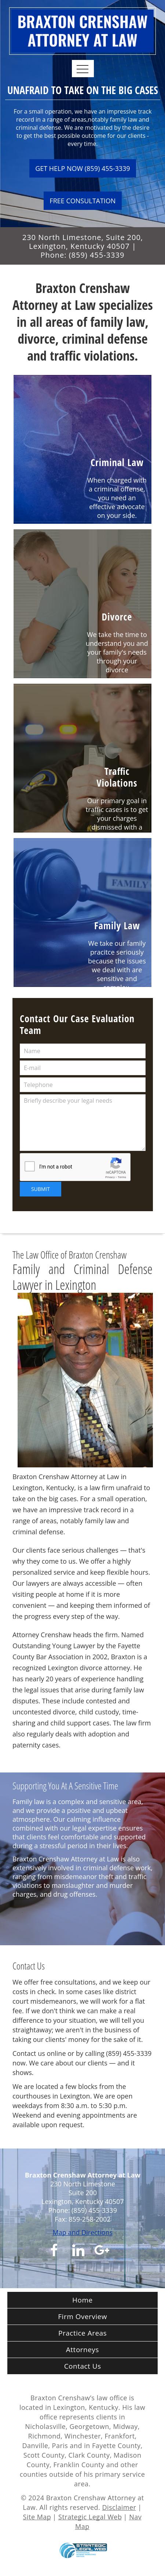 Braxton Crenshaw Attorney at Law - Lexington KY Lawyers